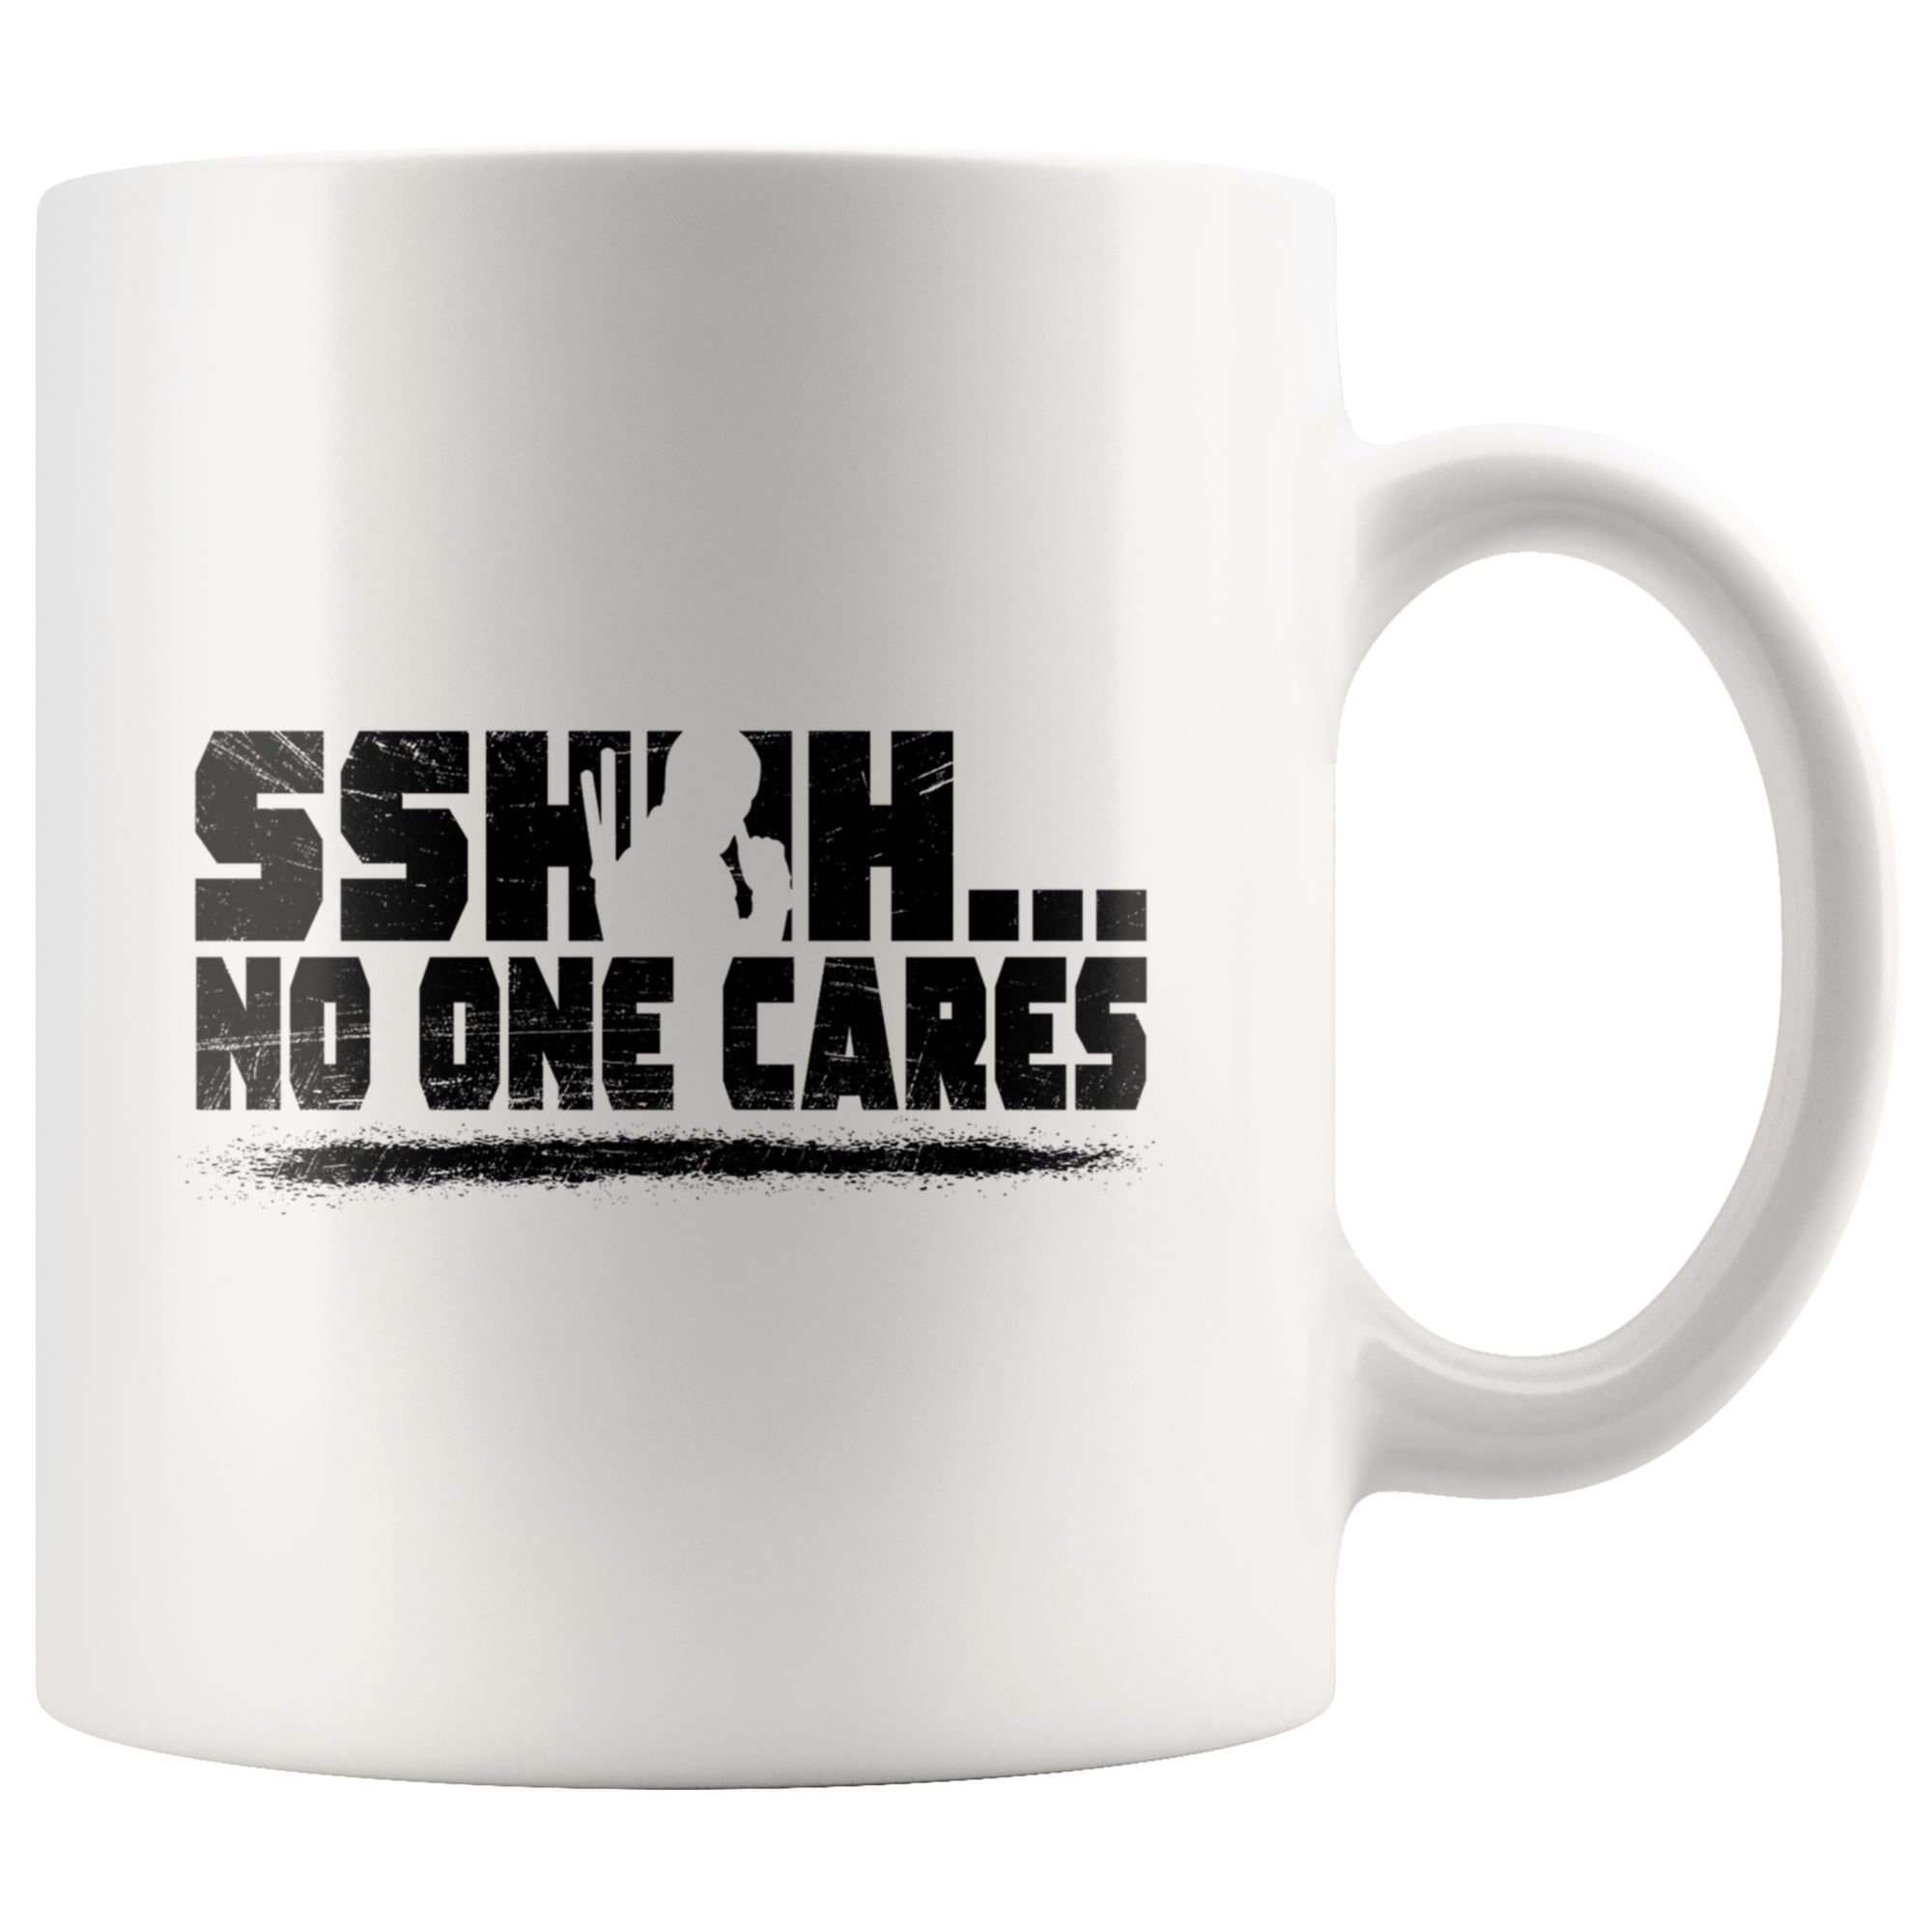 No One Cares Drinkware teelaunch 11oz Mug 